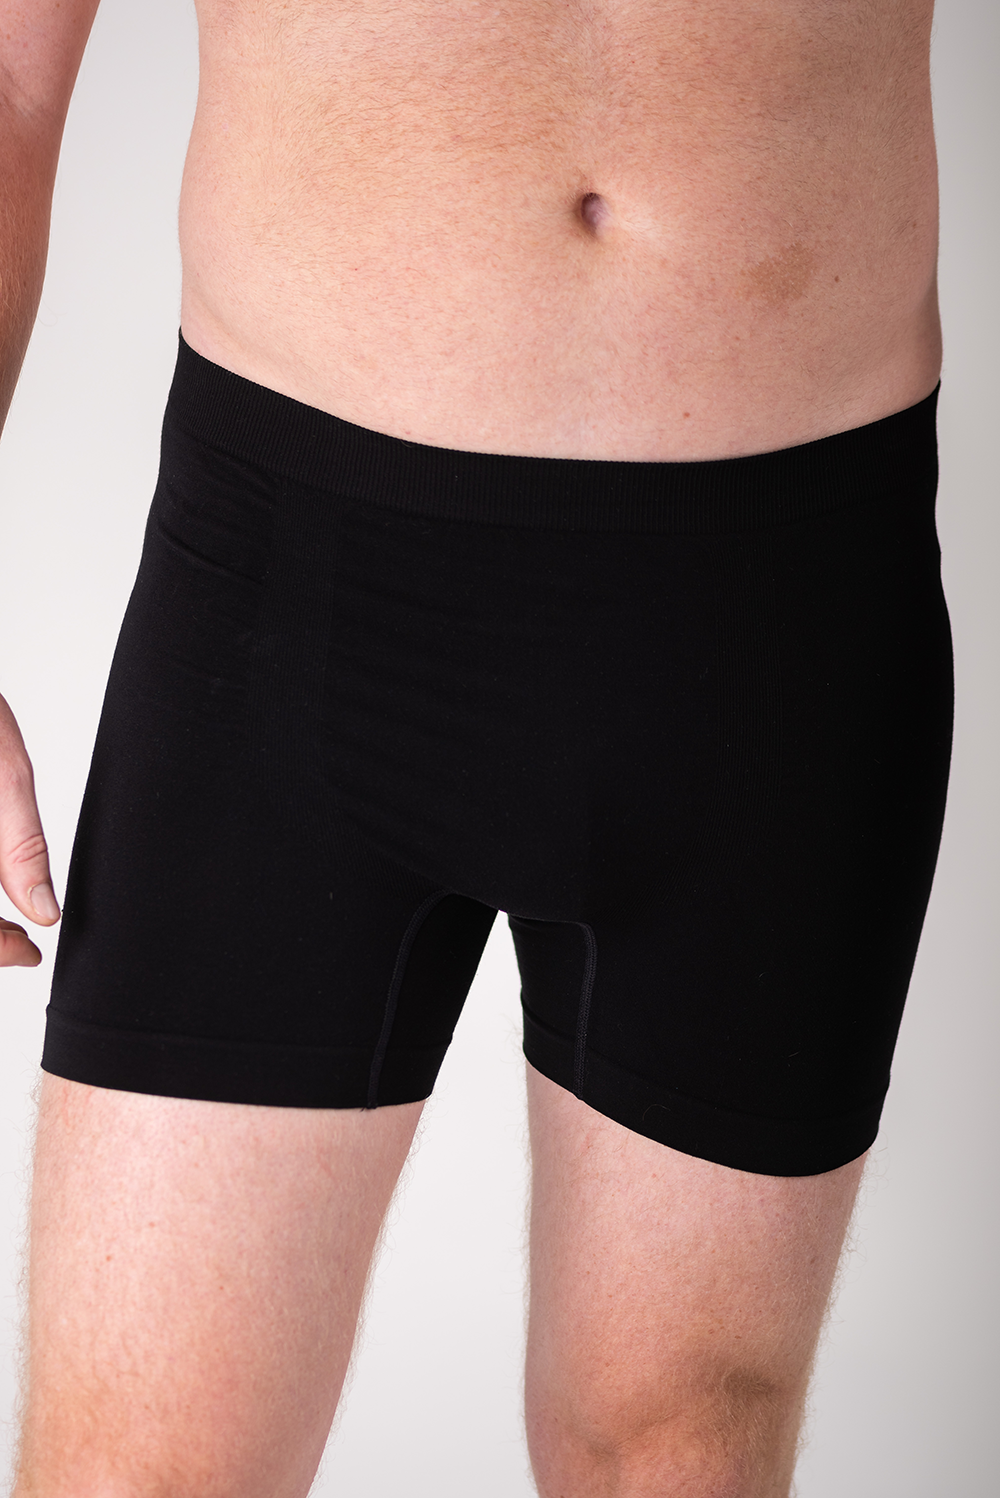 Men's Underwear  Natural, Bamboo Men's Boxer Briefs & More